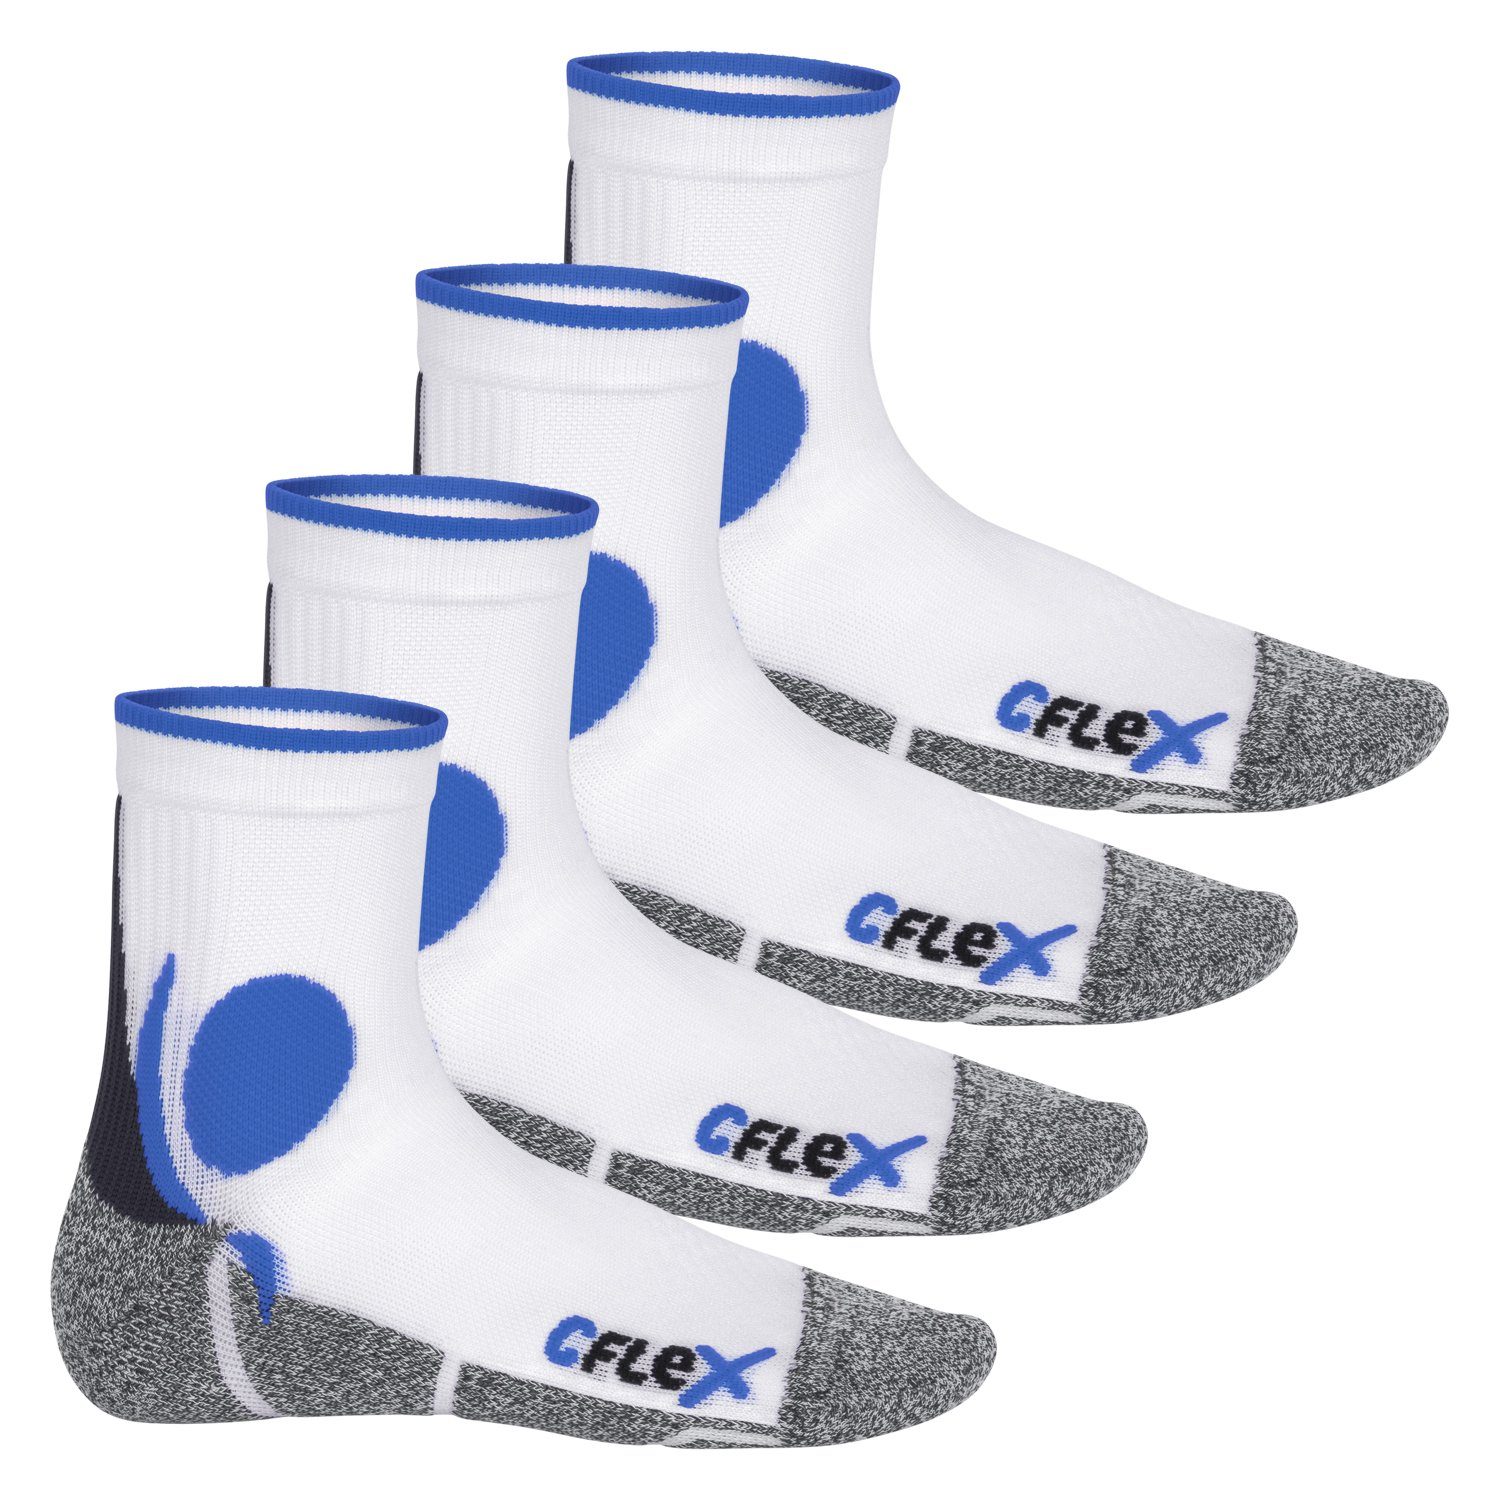 CFLEX Sportsocken Damen und Herren Running Funktions-Socken (4 Paar) Laufsocken Weiss/Blau